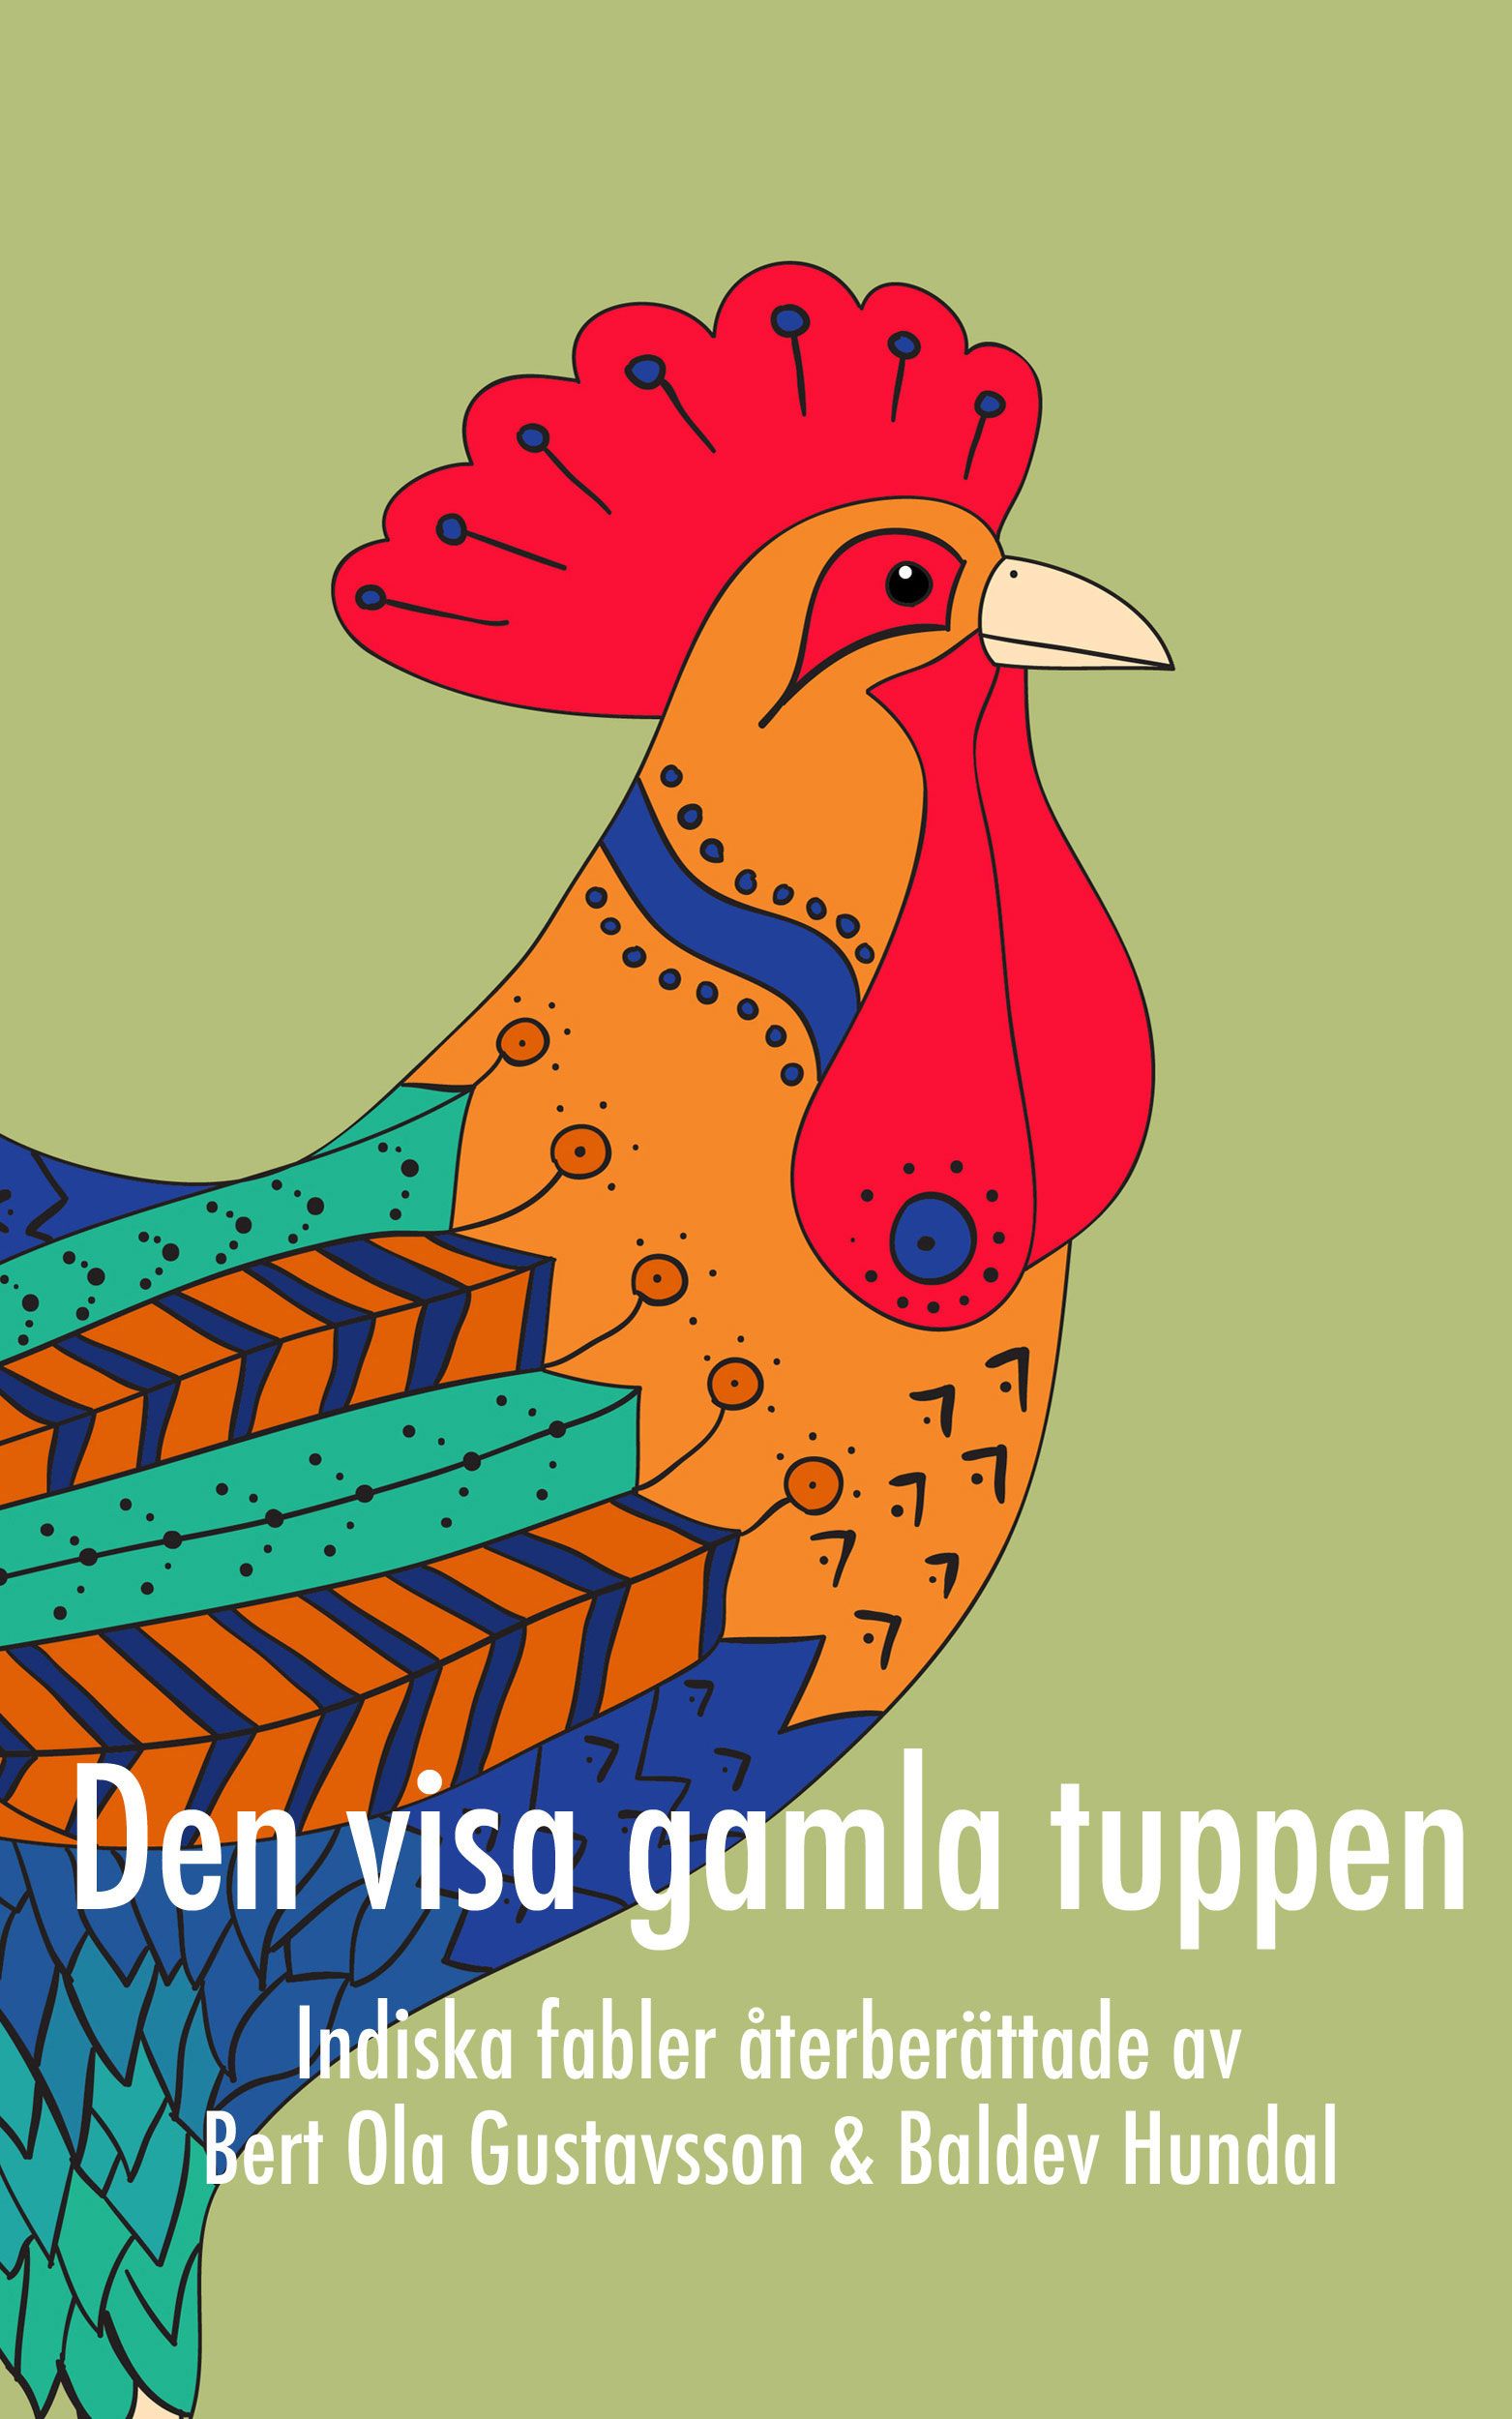 Den visa gamla tuppen, eBook by Bert Ola Gustavsson, Baldev Hundal